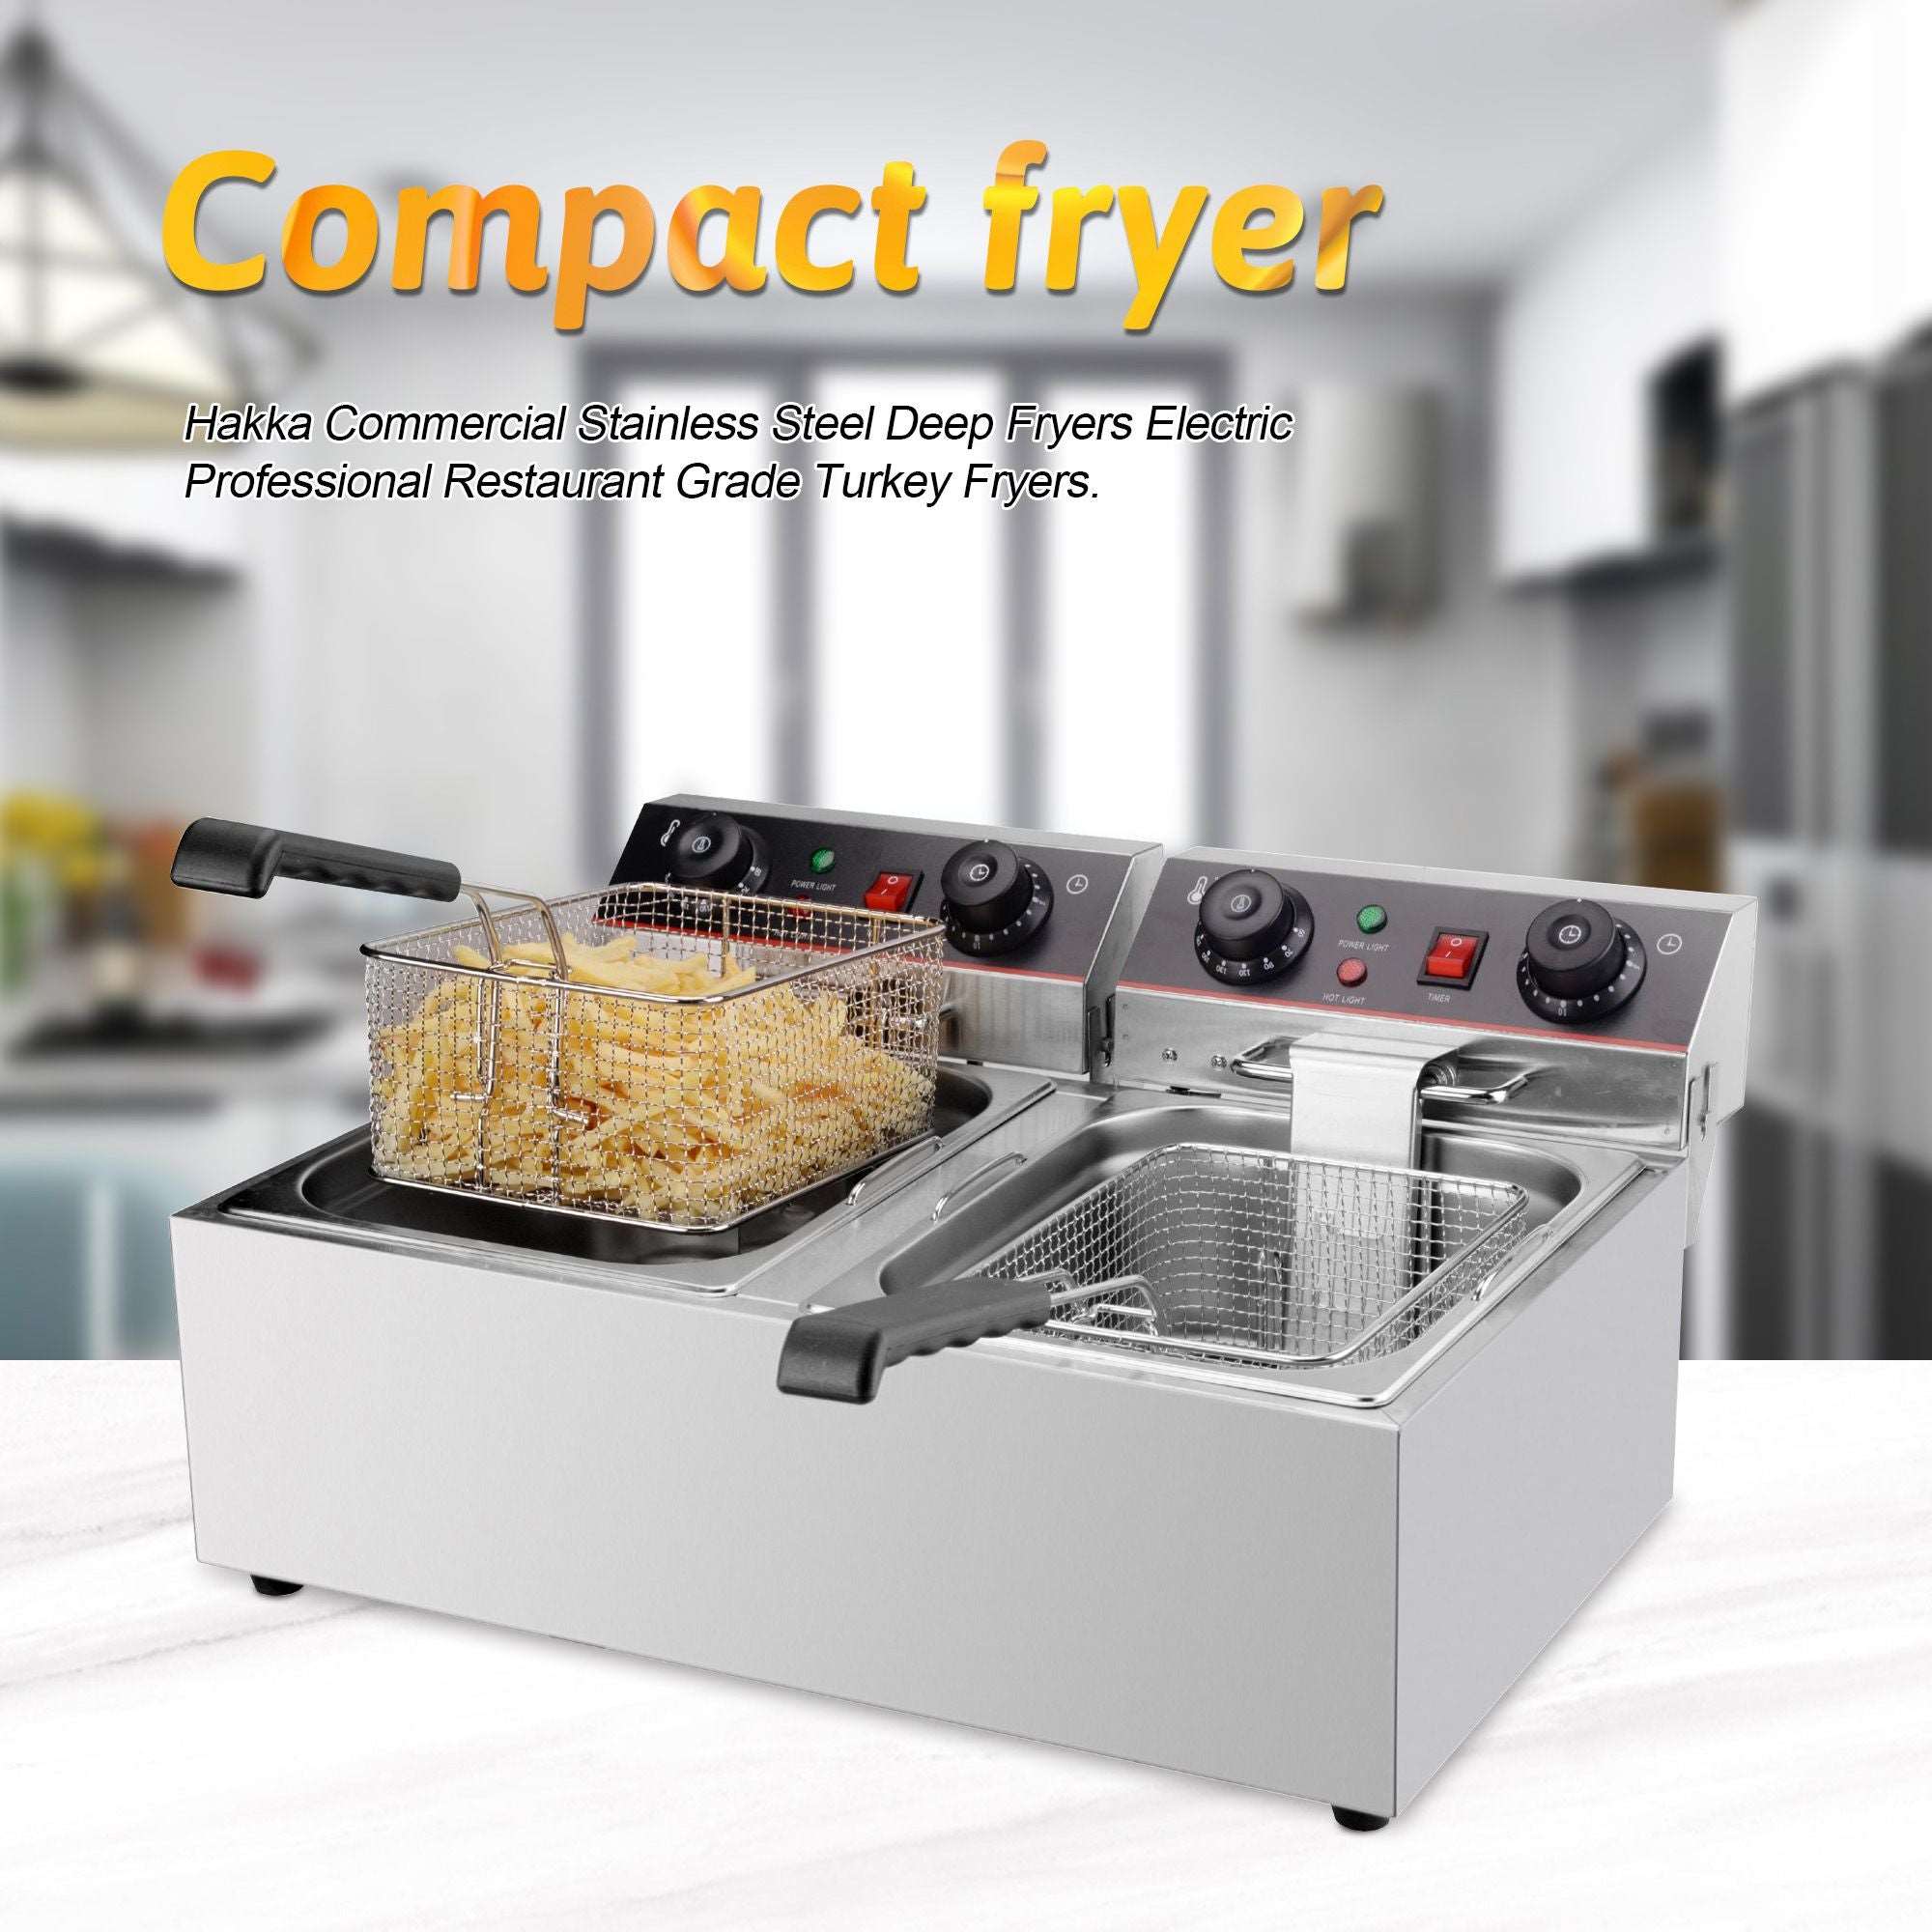 EasyRose Commercial Stainless Steel Deep Fryers Electric Professional Restaurant Grade Turkey Fryers (2x6 Liter)